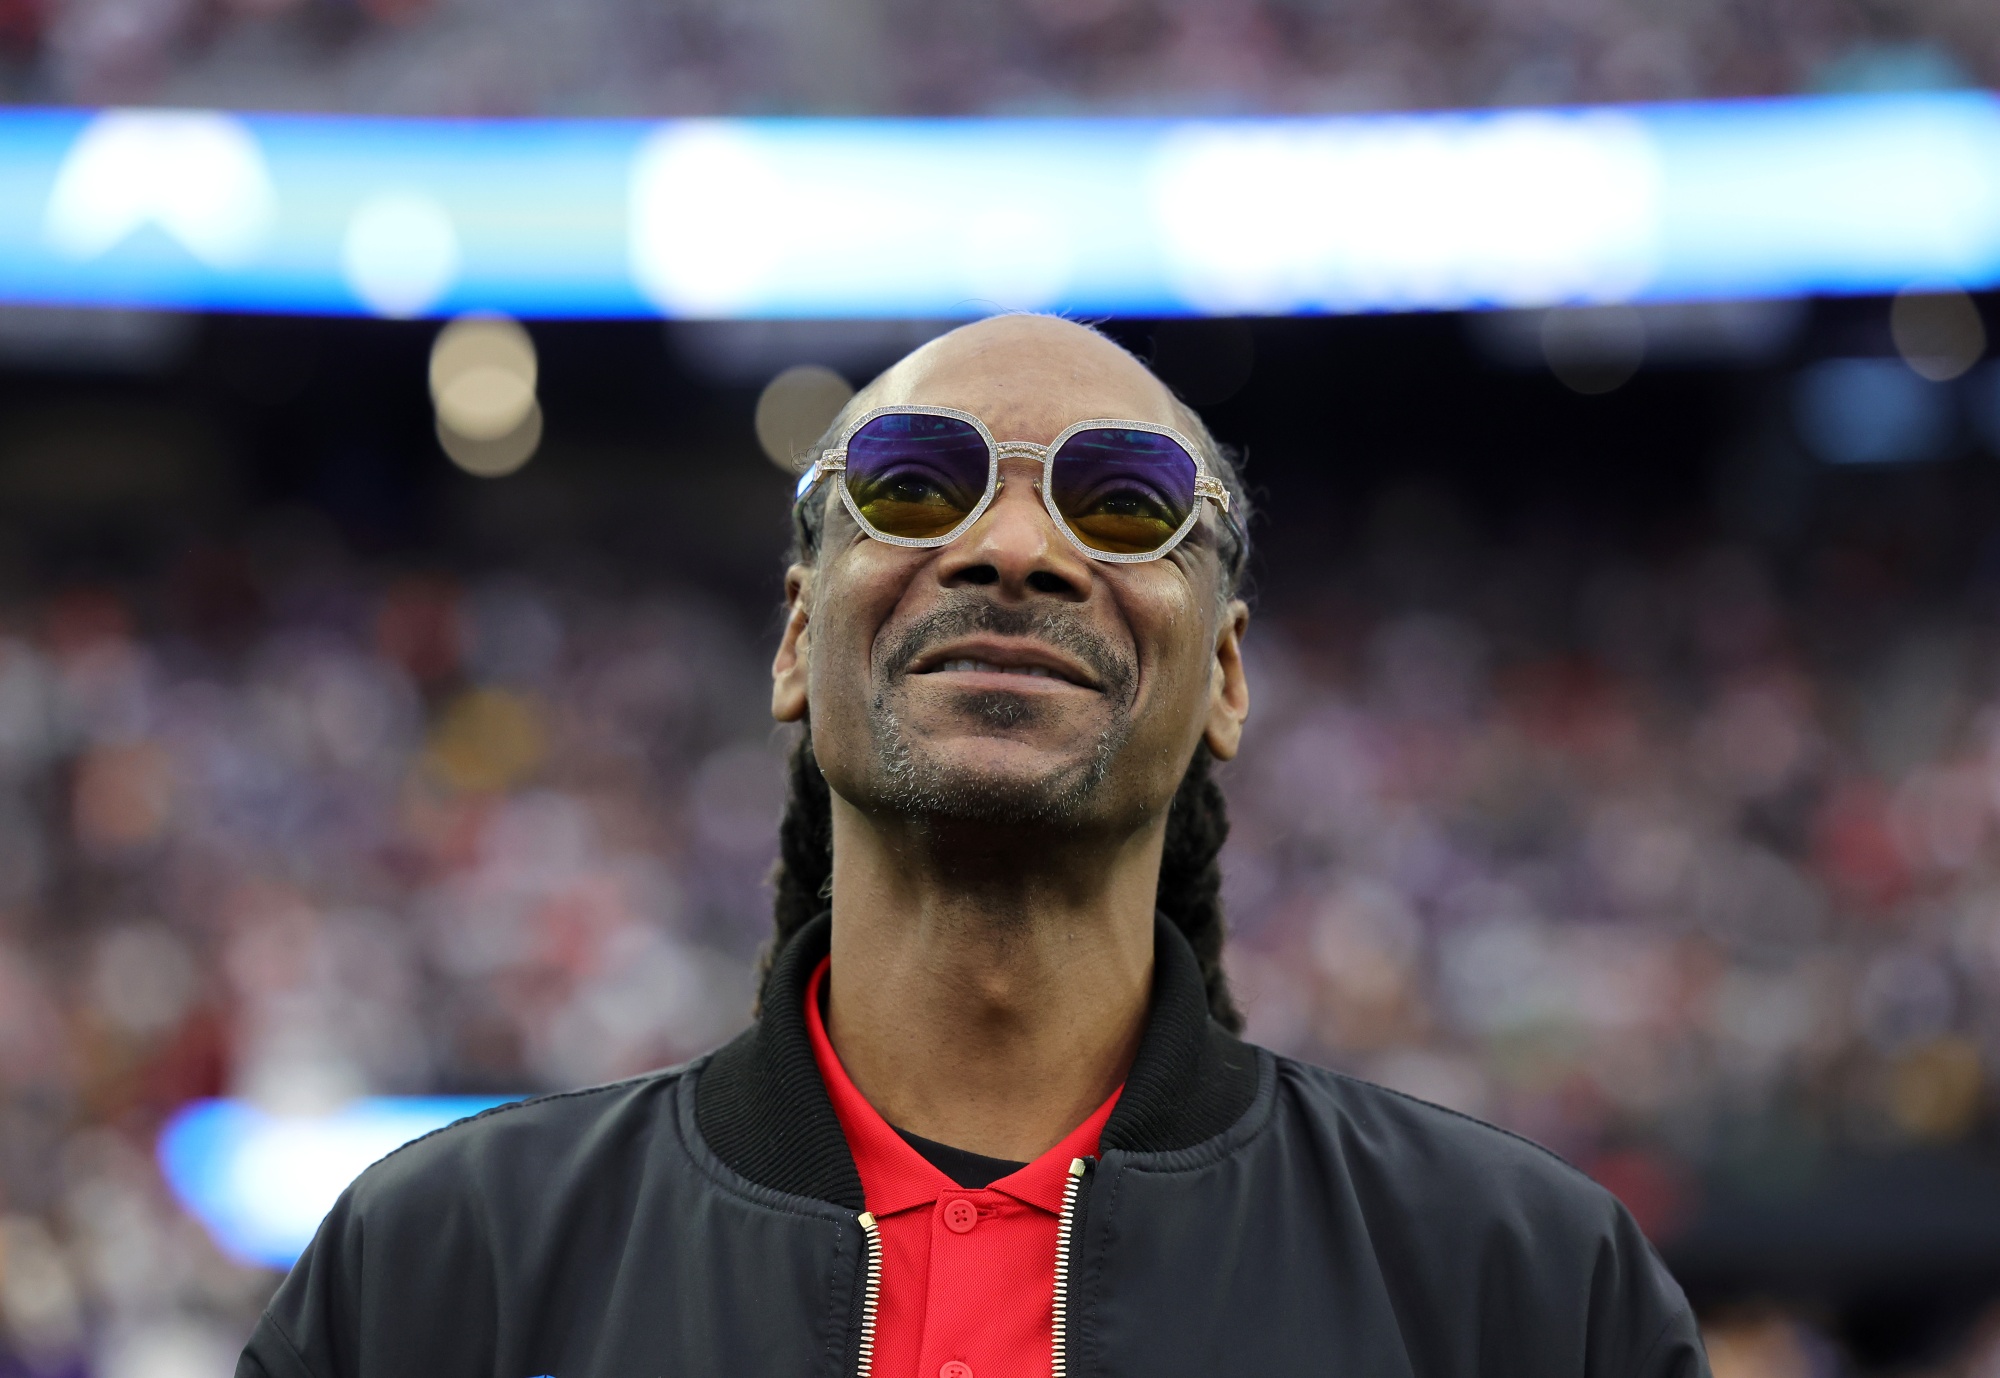 Snoop Dogg sees Senators ownership as tool to get kids 'who look